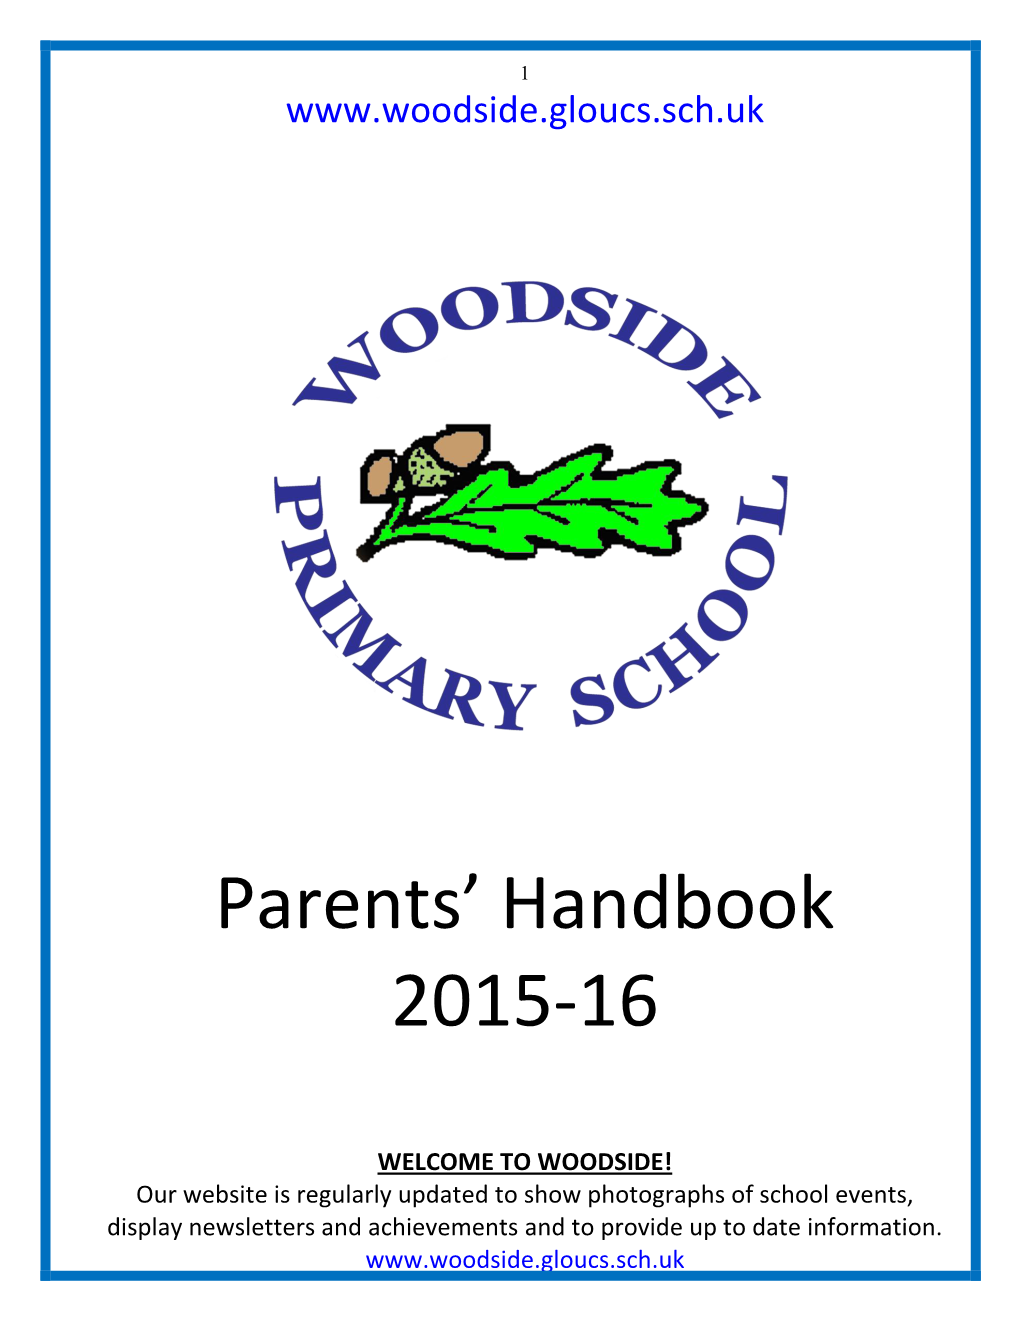 Parents' Handbook 2015-16